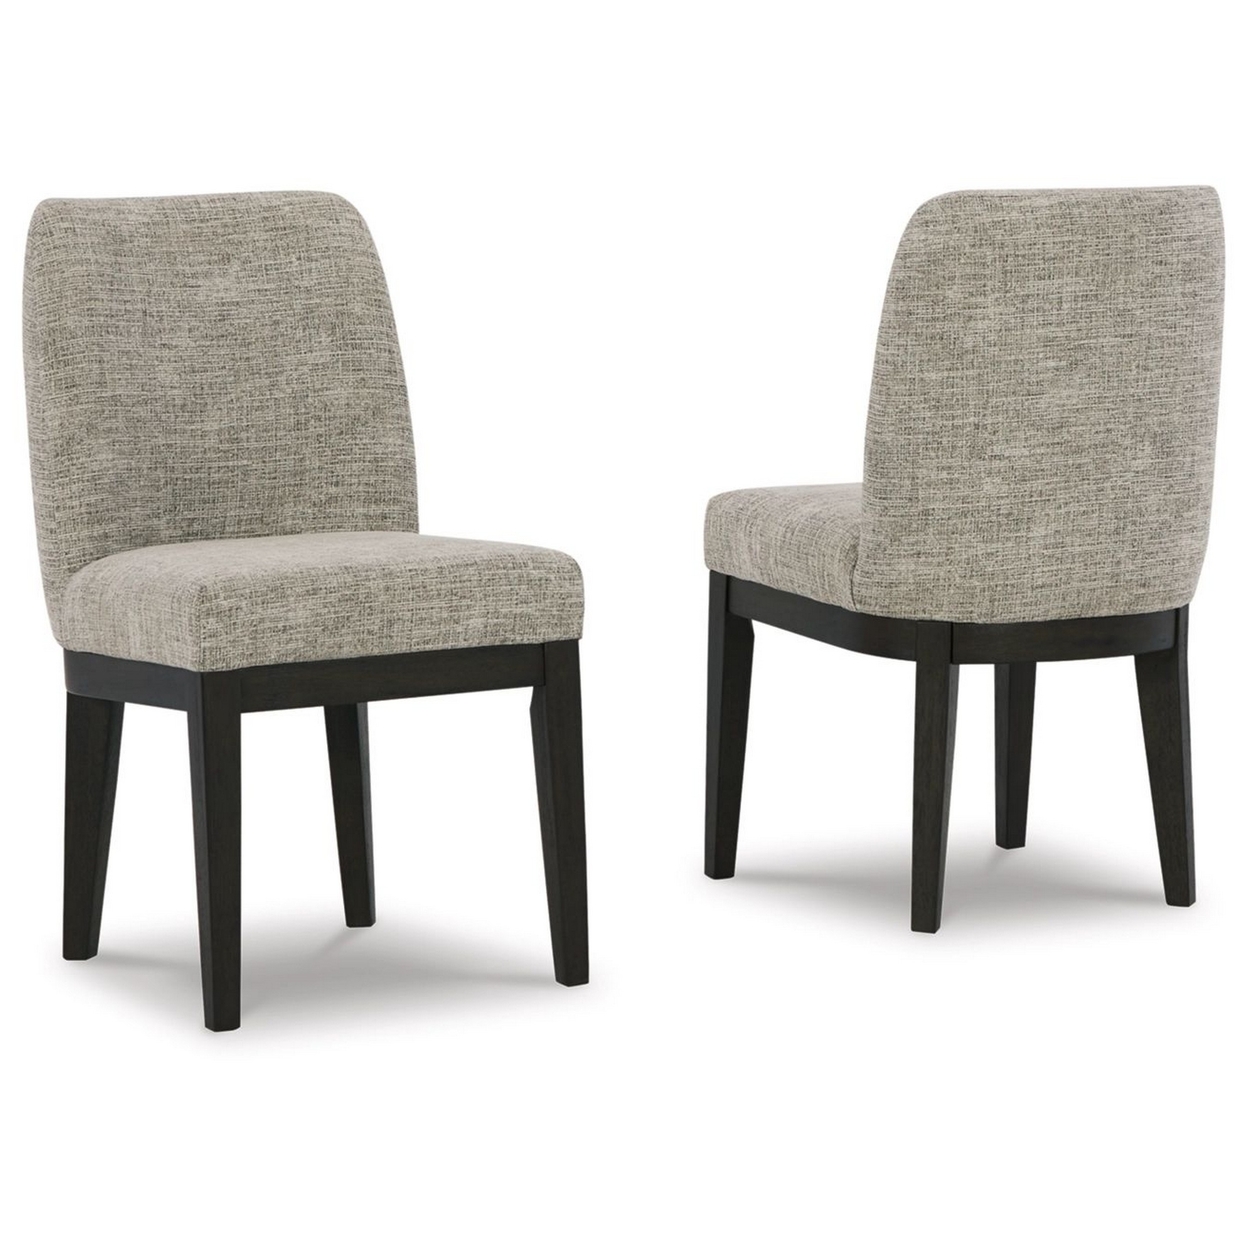 Sonn 24 Inch Dining Side Chair, Set Of 2, Padded Beige Upholstery, Brown Legs- Saltoro Sherpi